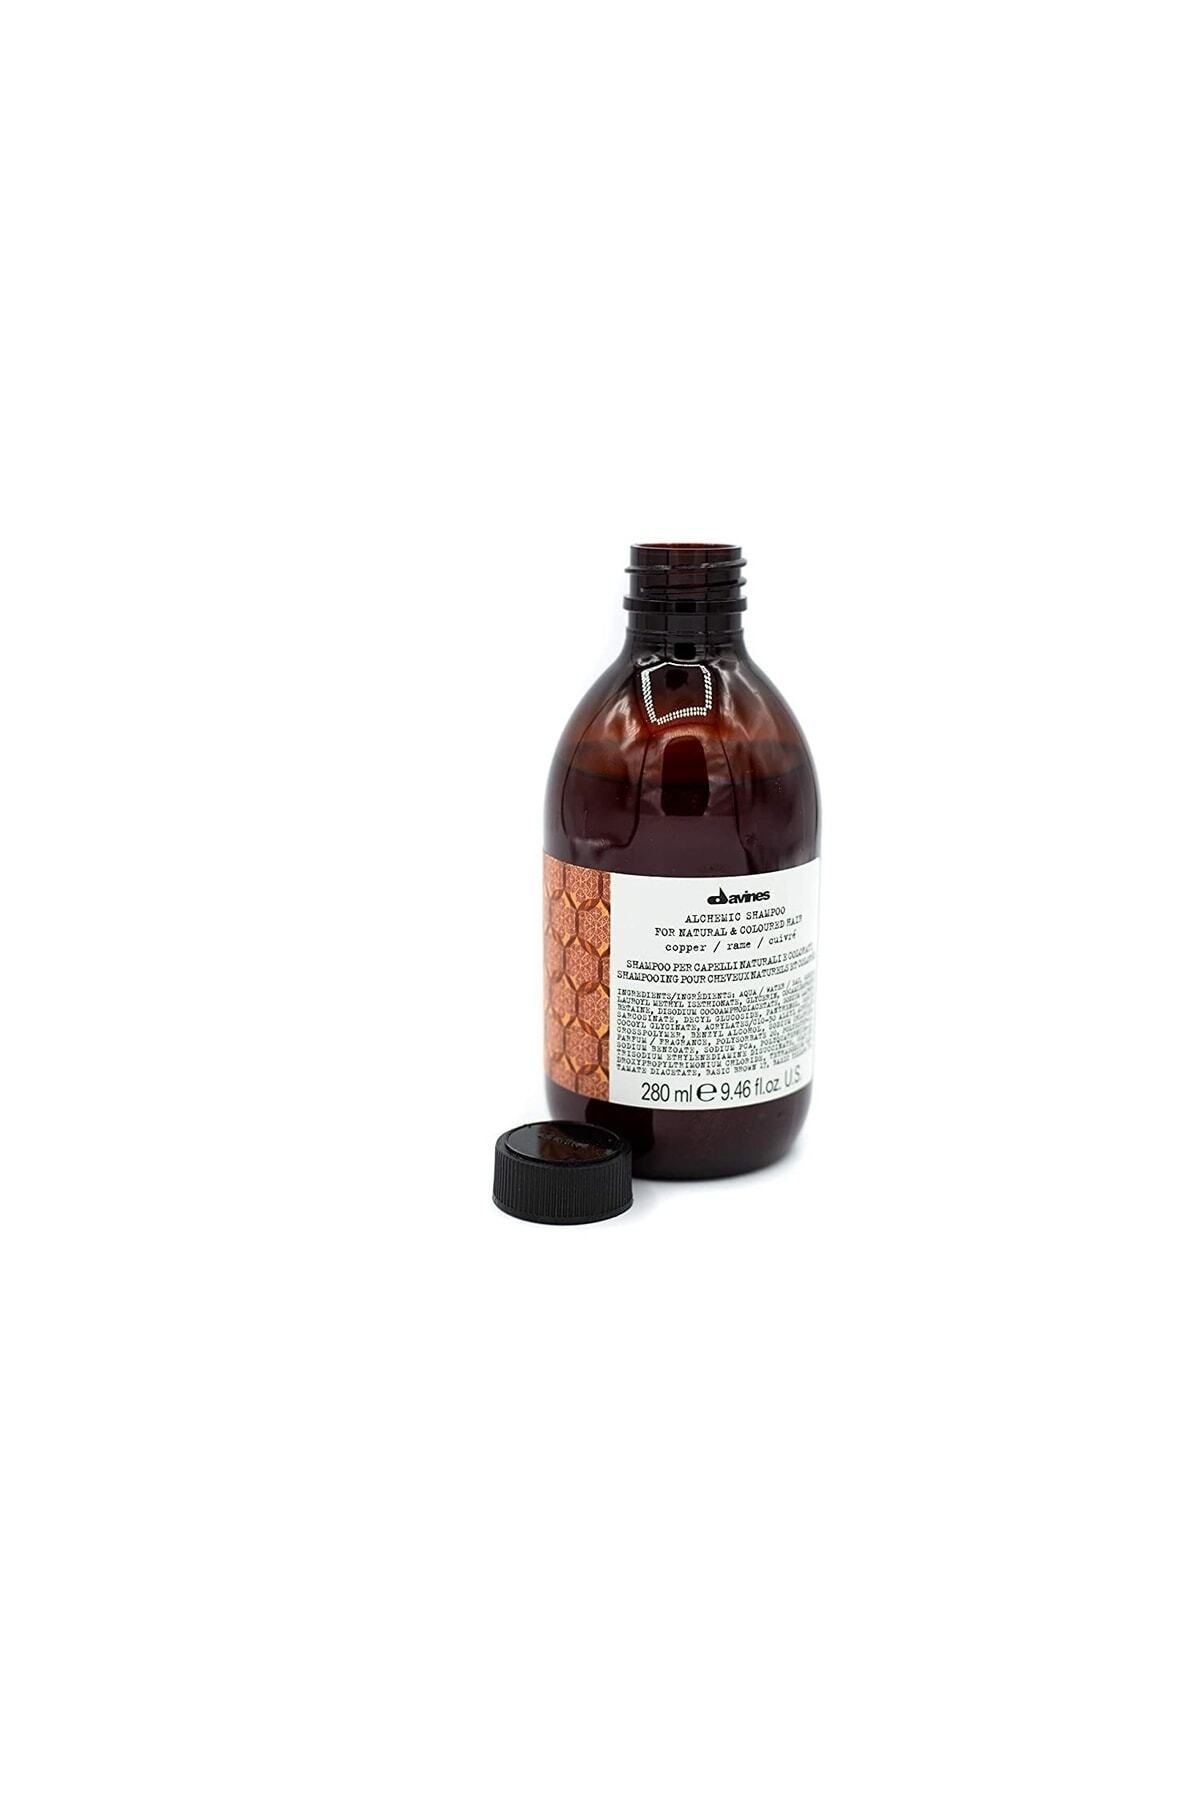 Davines Alchemic Shampoo Copper Sıcak Kırmızı Ve Bakır saçlara Şampuan DAVİNES-NOONLINE2043